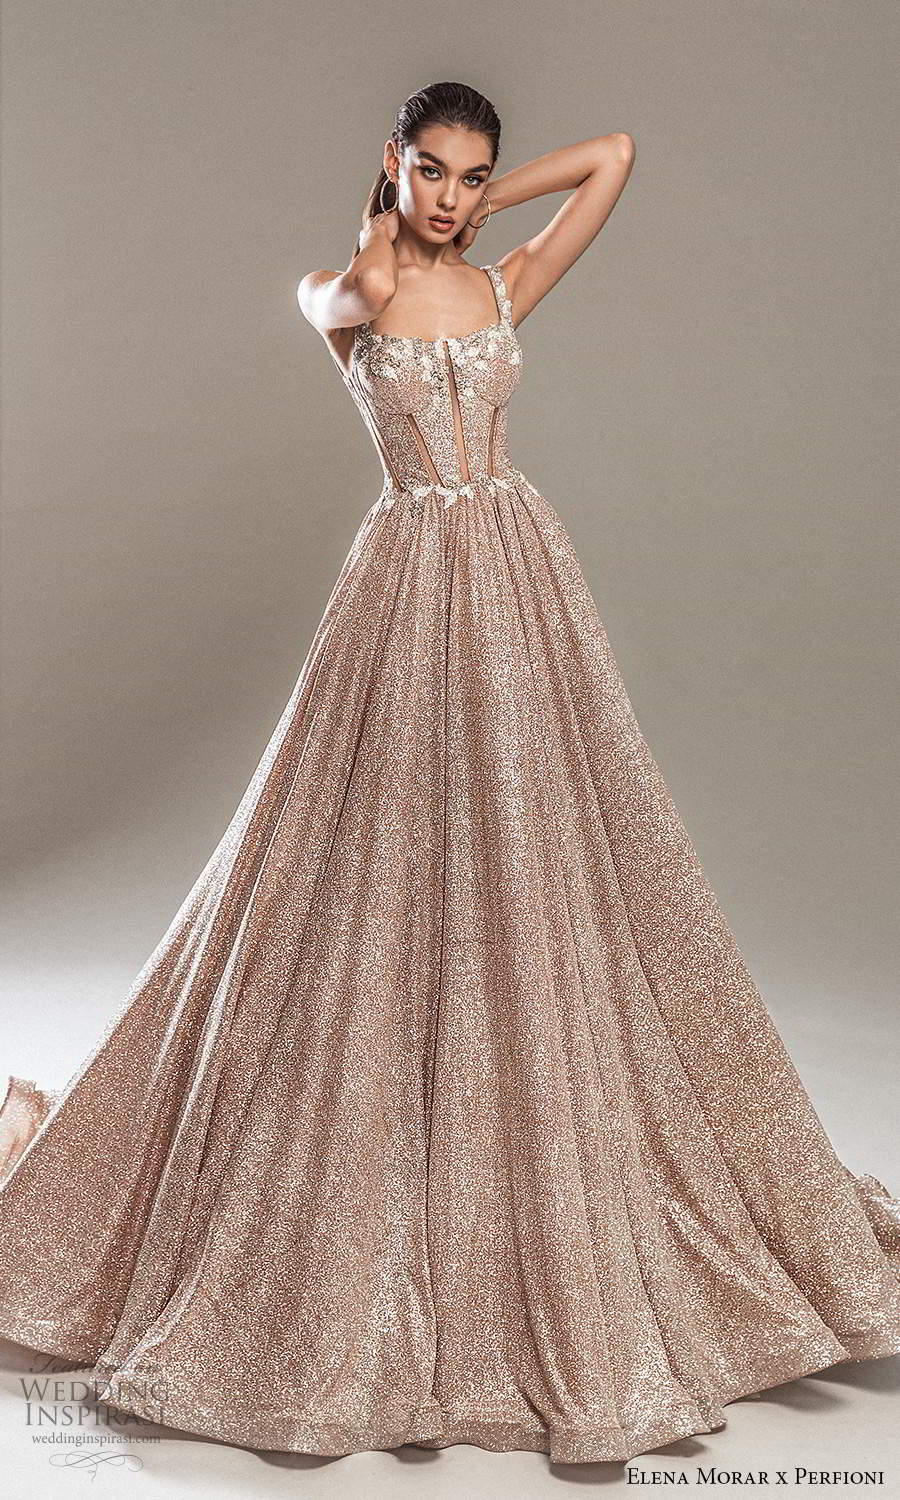 elena morar perfioni 2021 bridal sleeveless straps semi sweetheart neckline fully embellished a line ball gown wedding dress chapel train metallic blush (9) mv